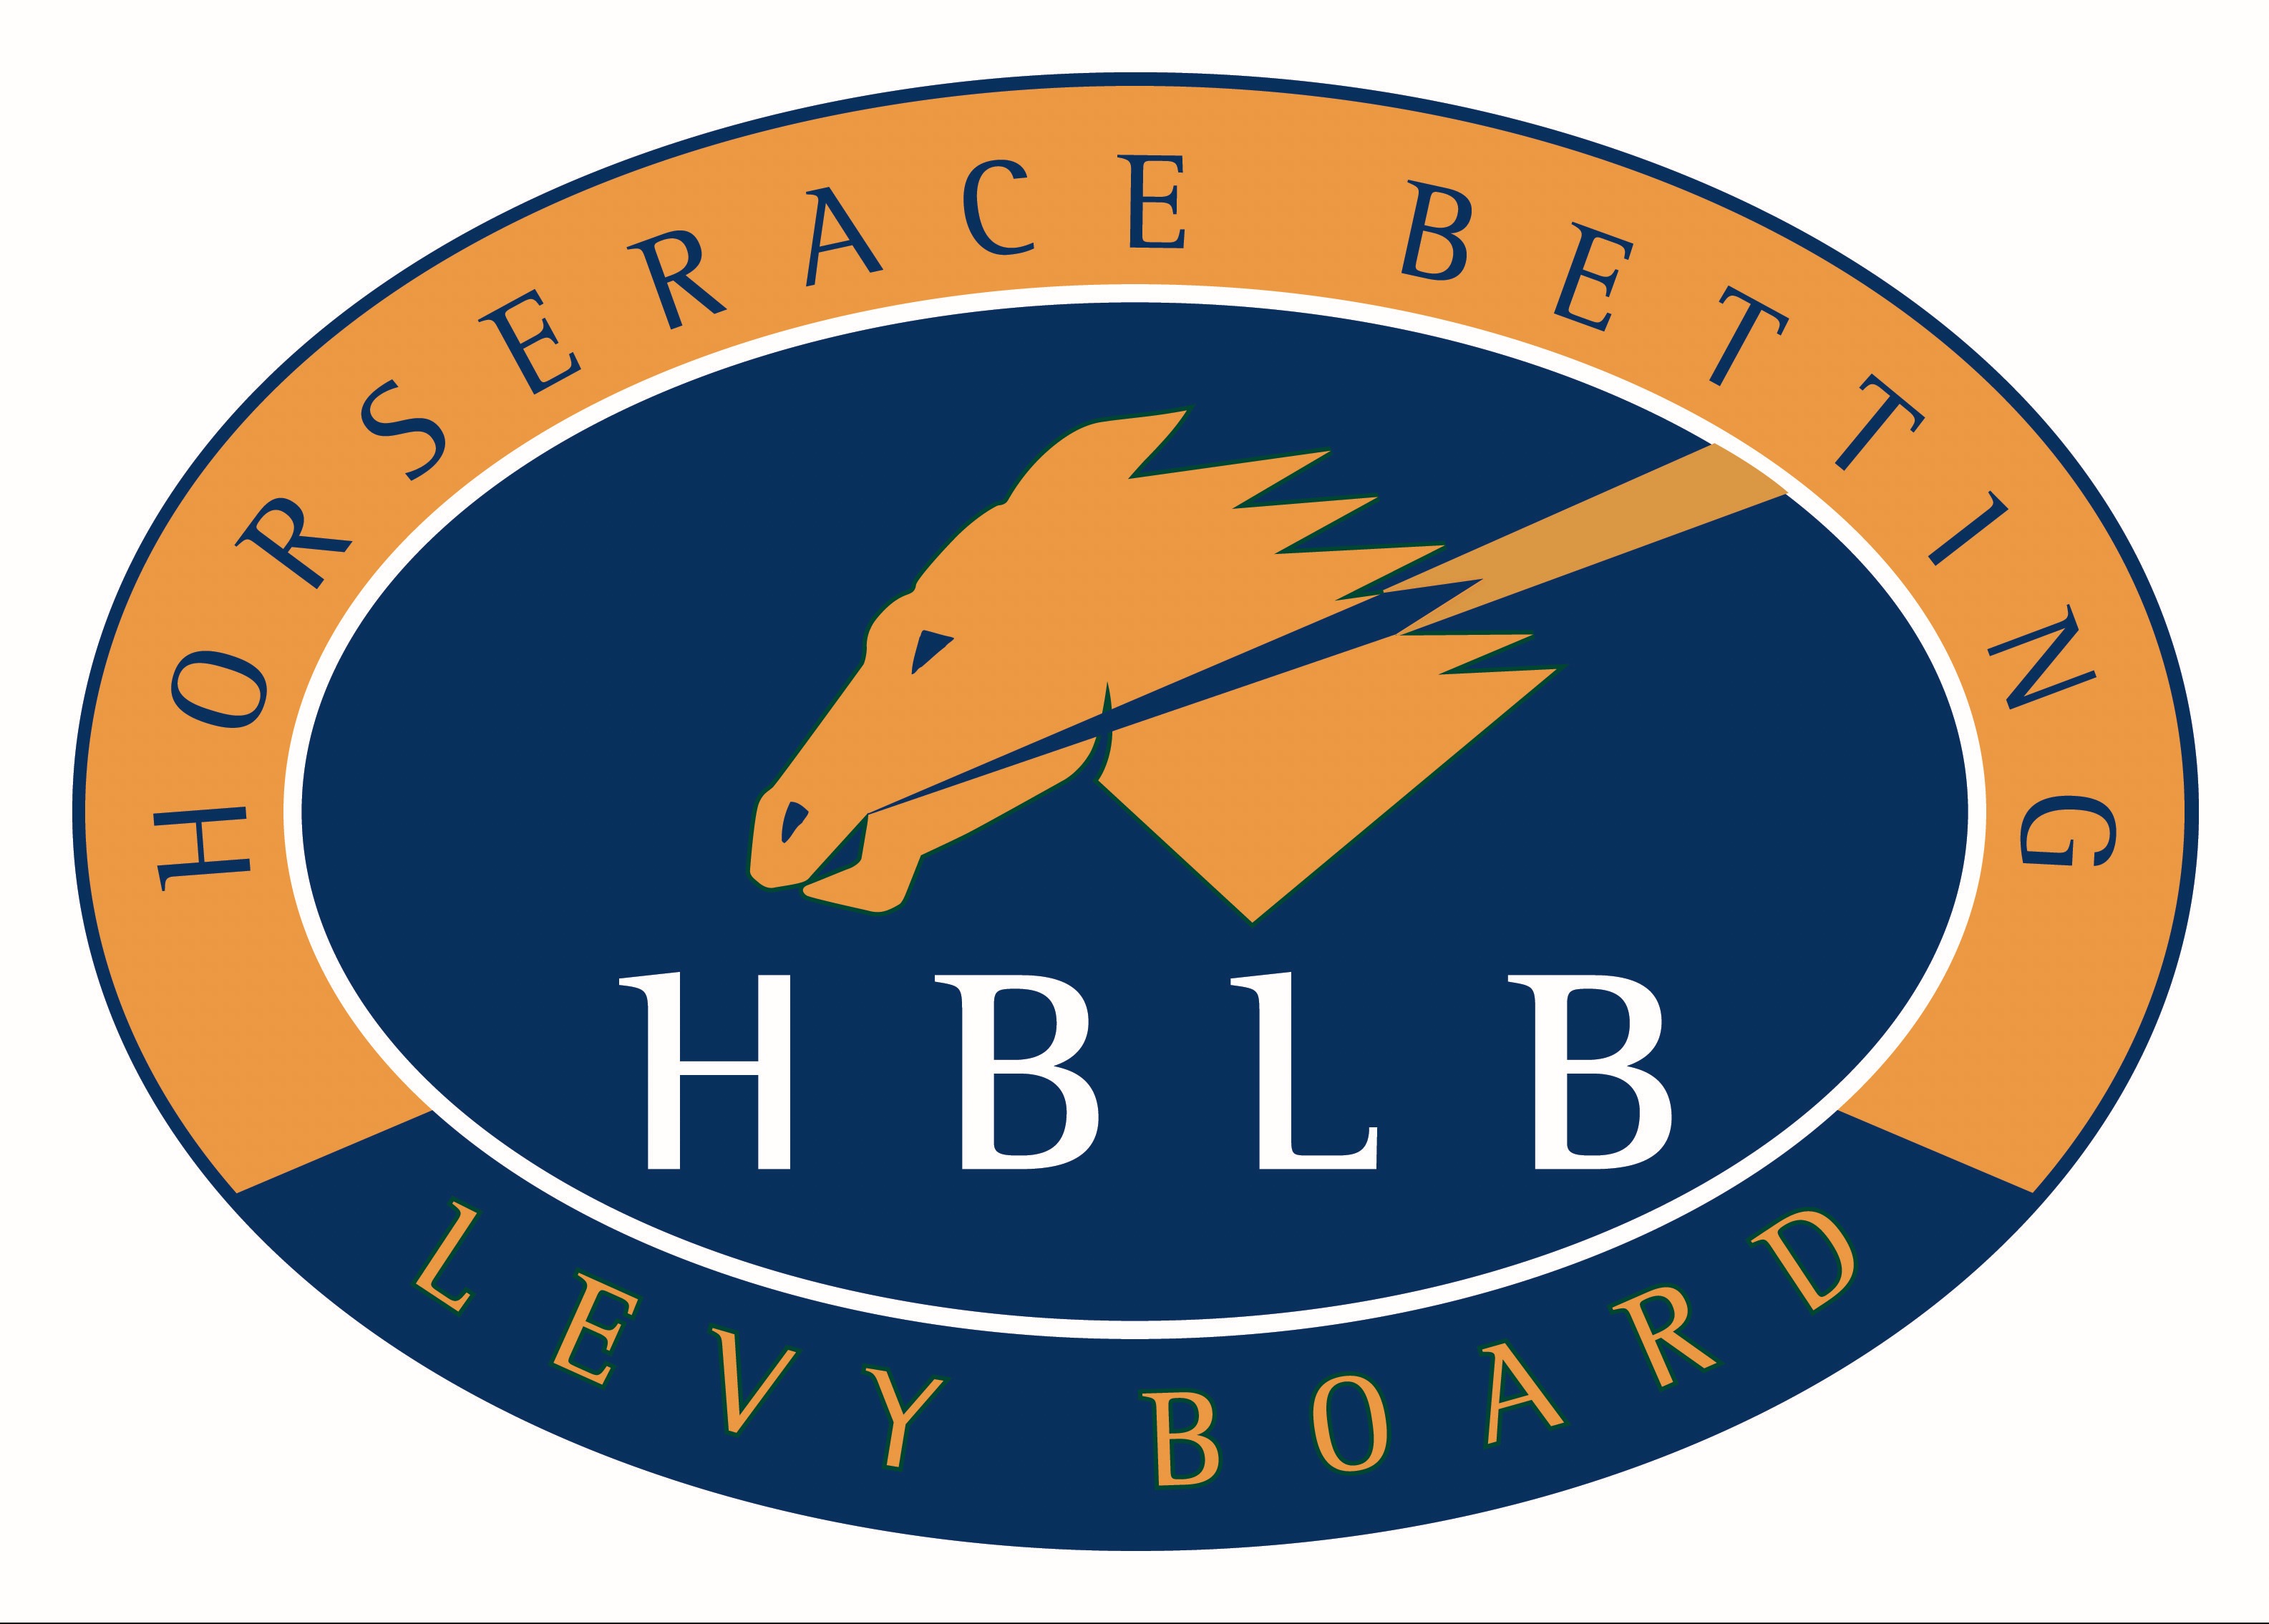 Horserace Betting Levy Board